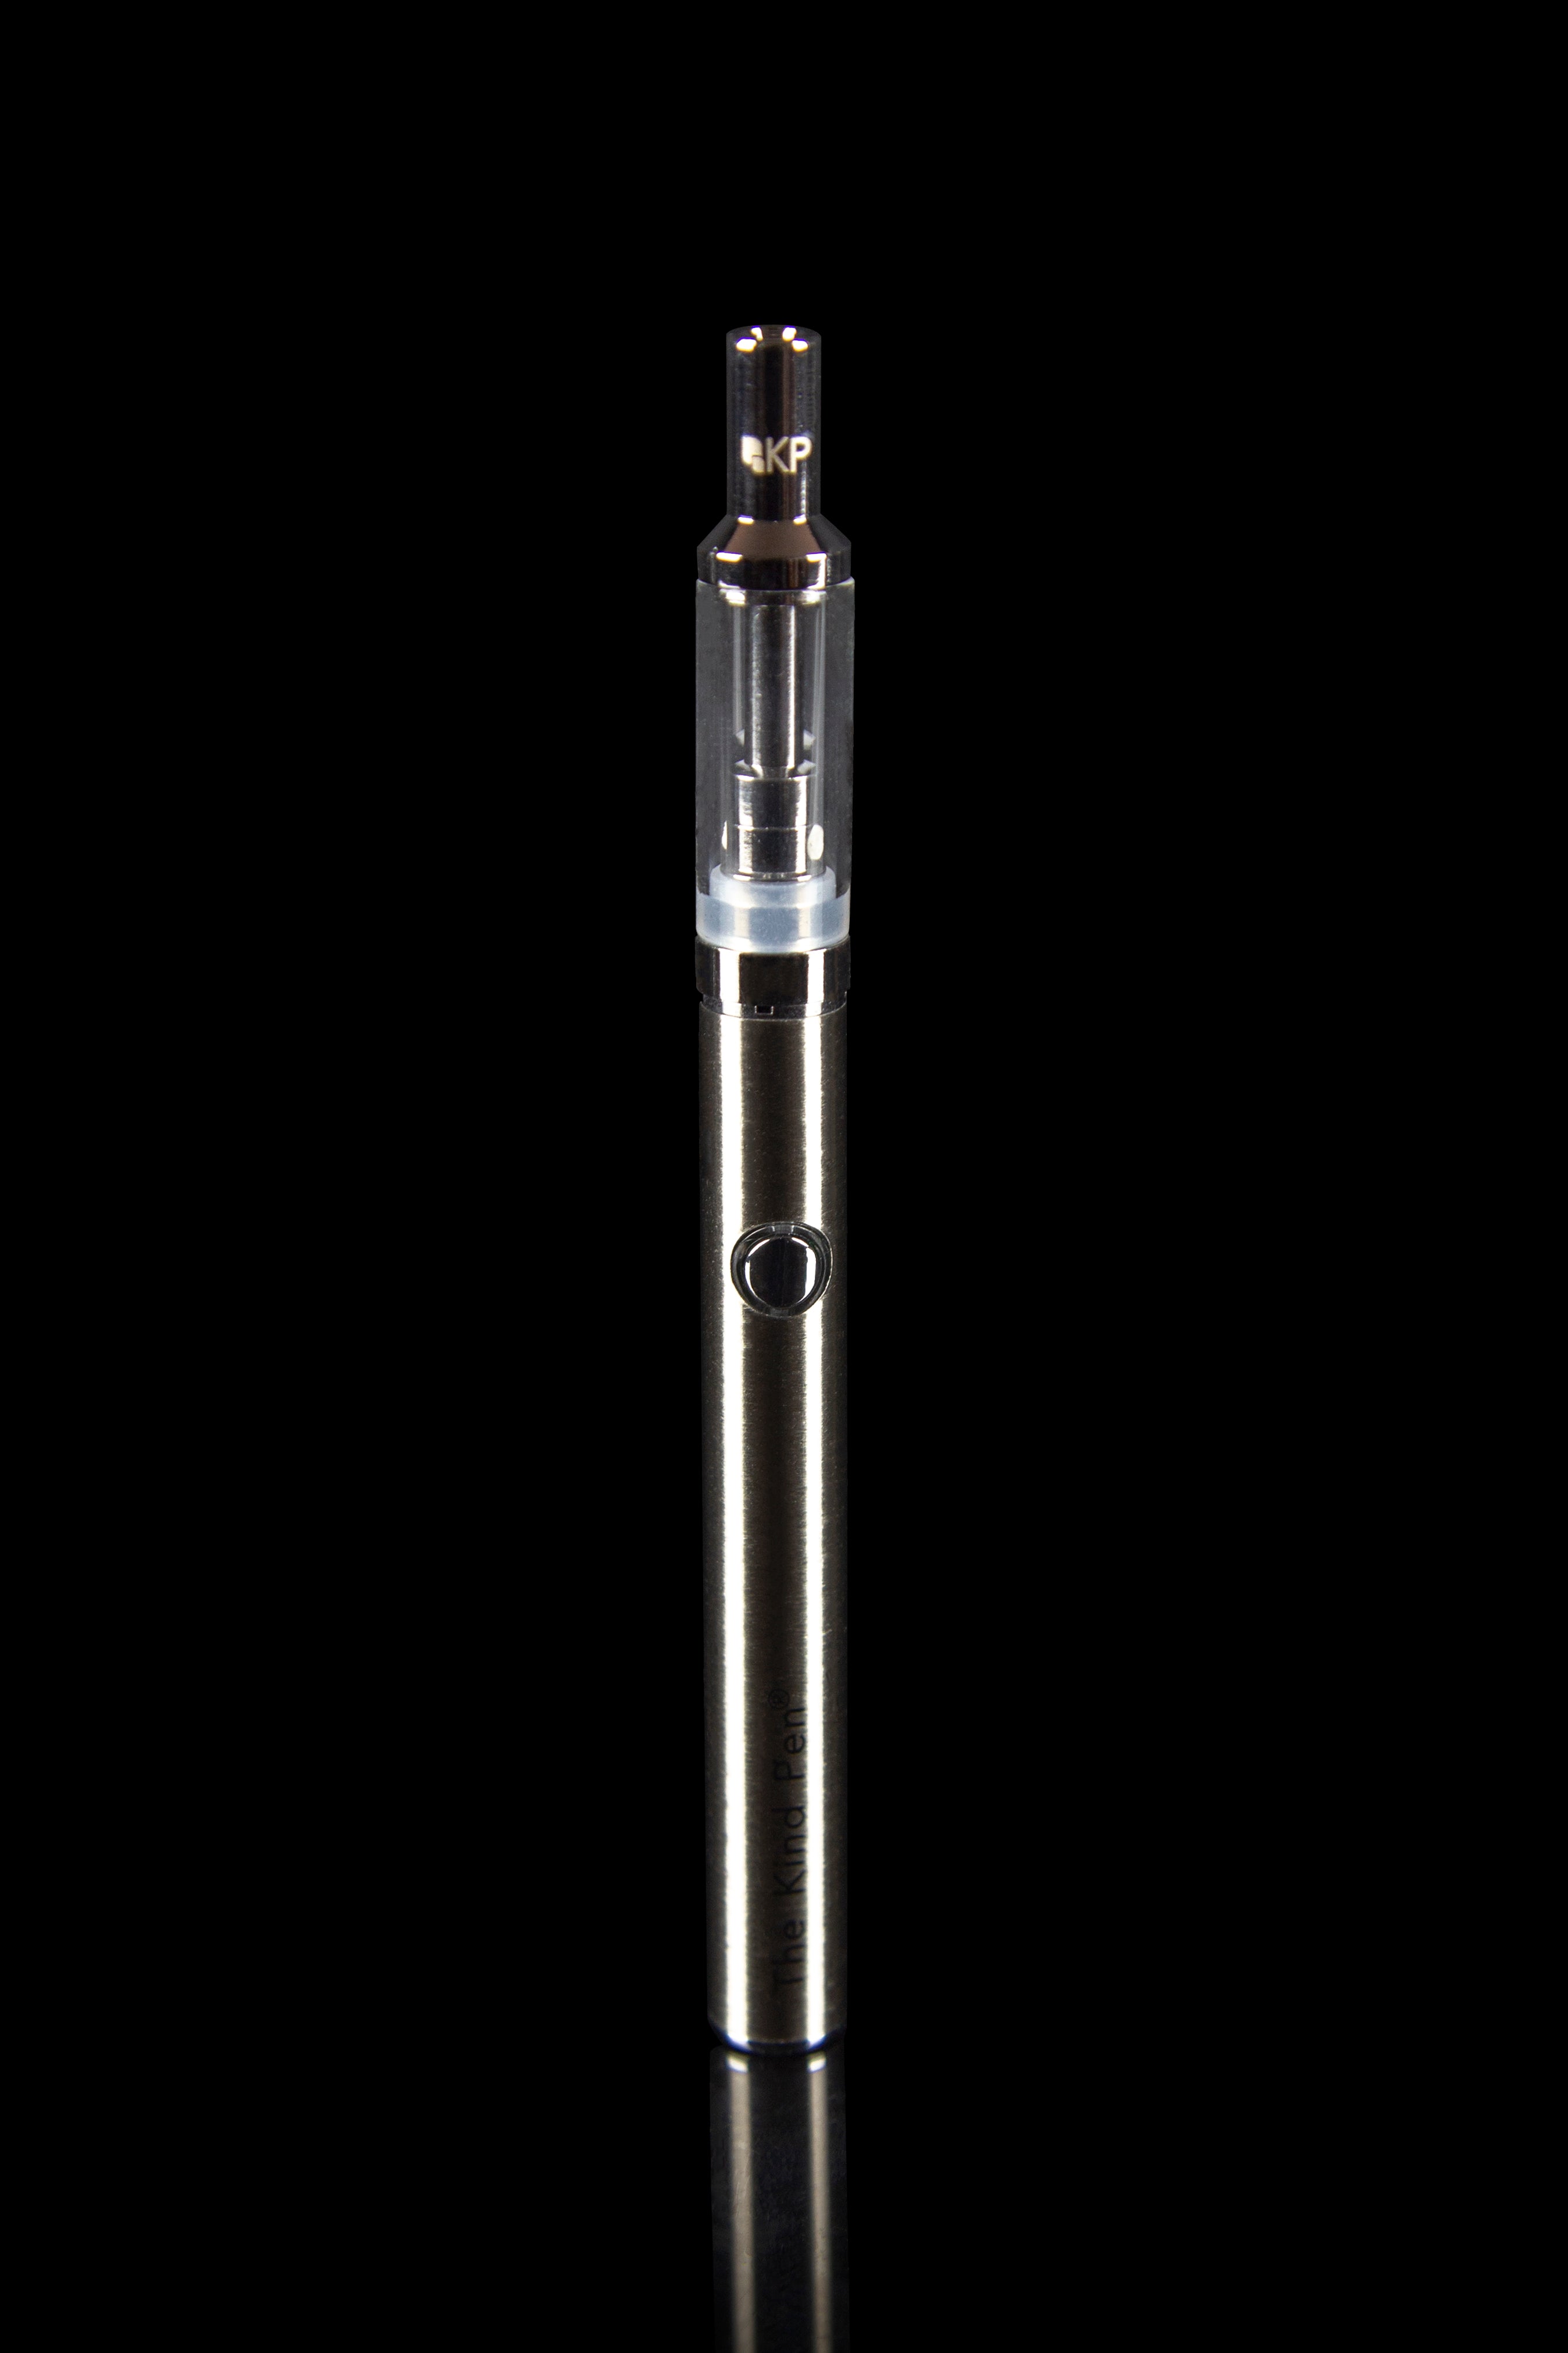 Image of The Kind Pen Slim Oil Premium Edition Vaporizer